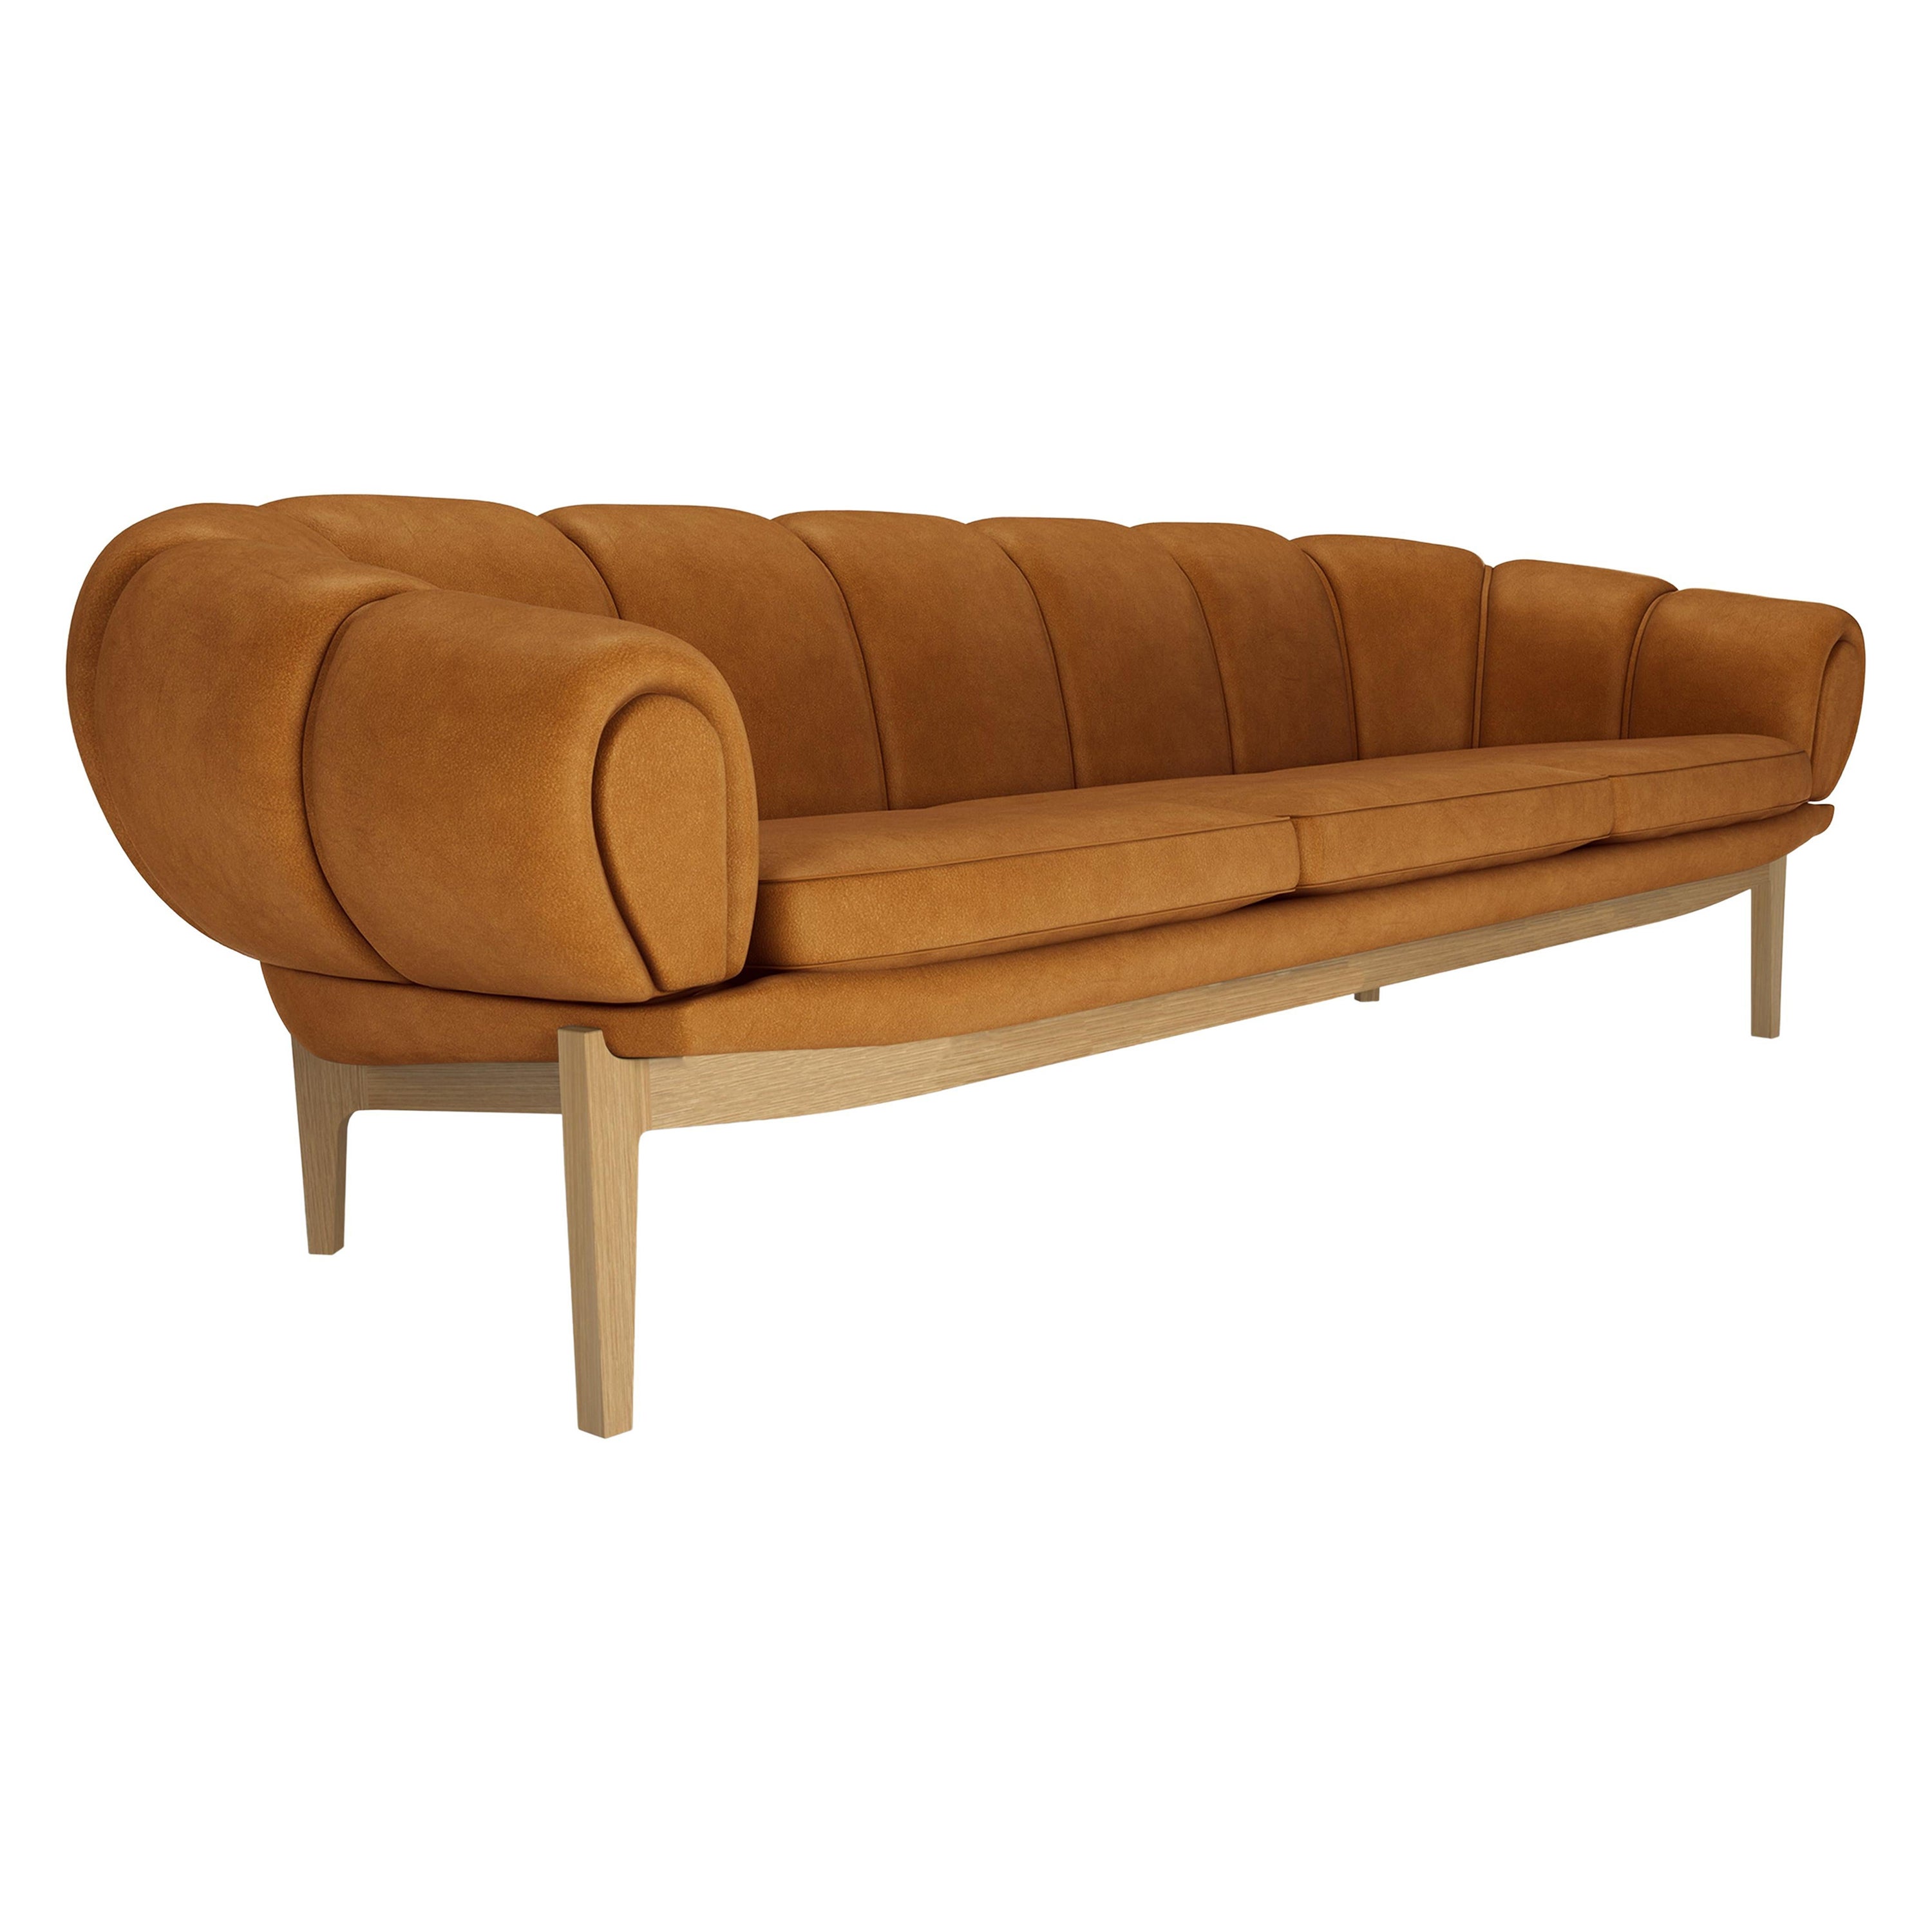 Leather 'Croissant' Sofa by Illum Wikkelsø for Gubi with Oak Legs For Sale